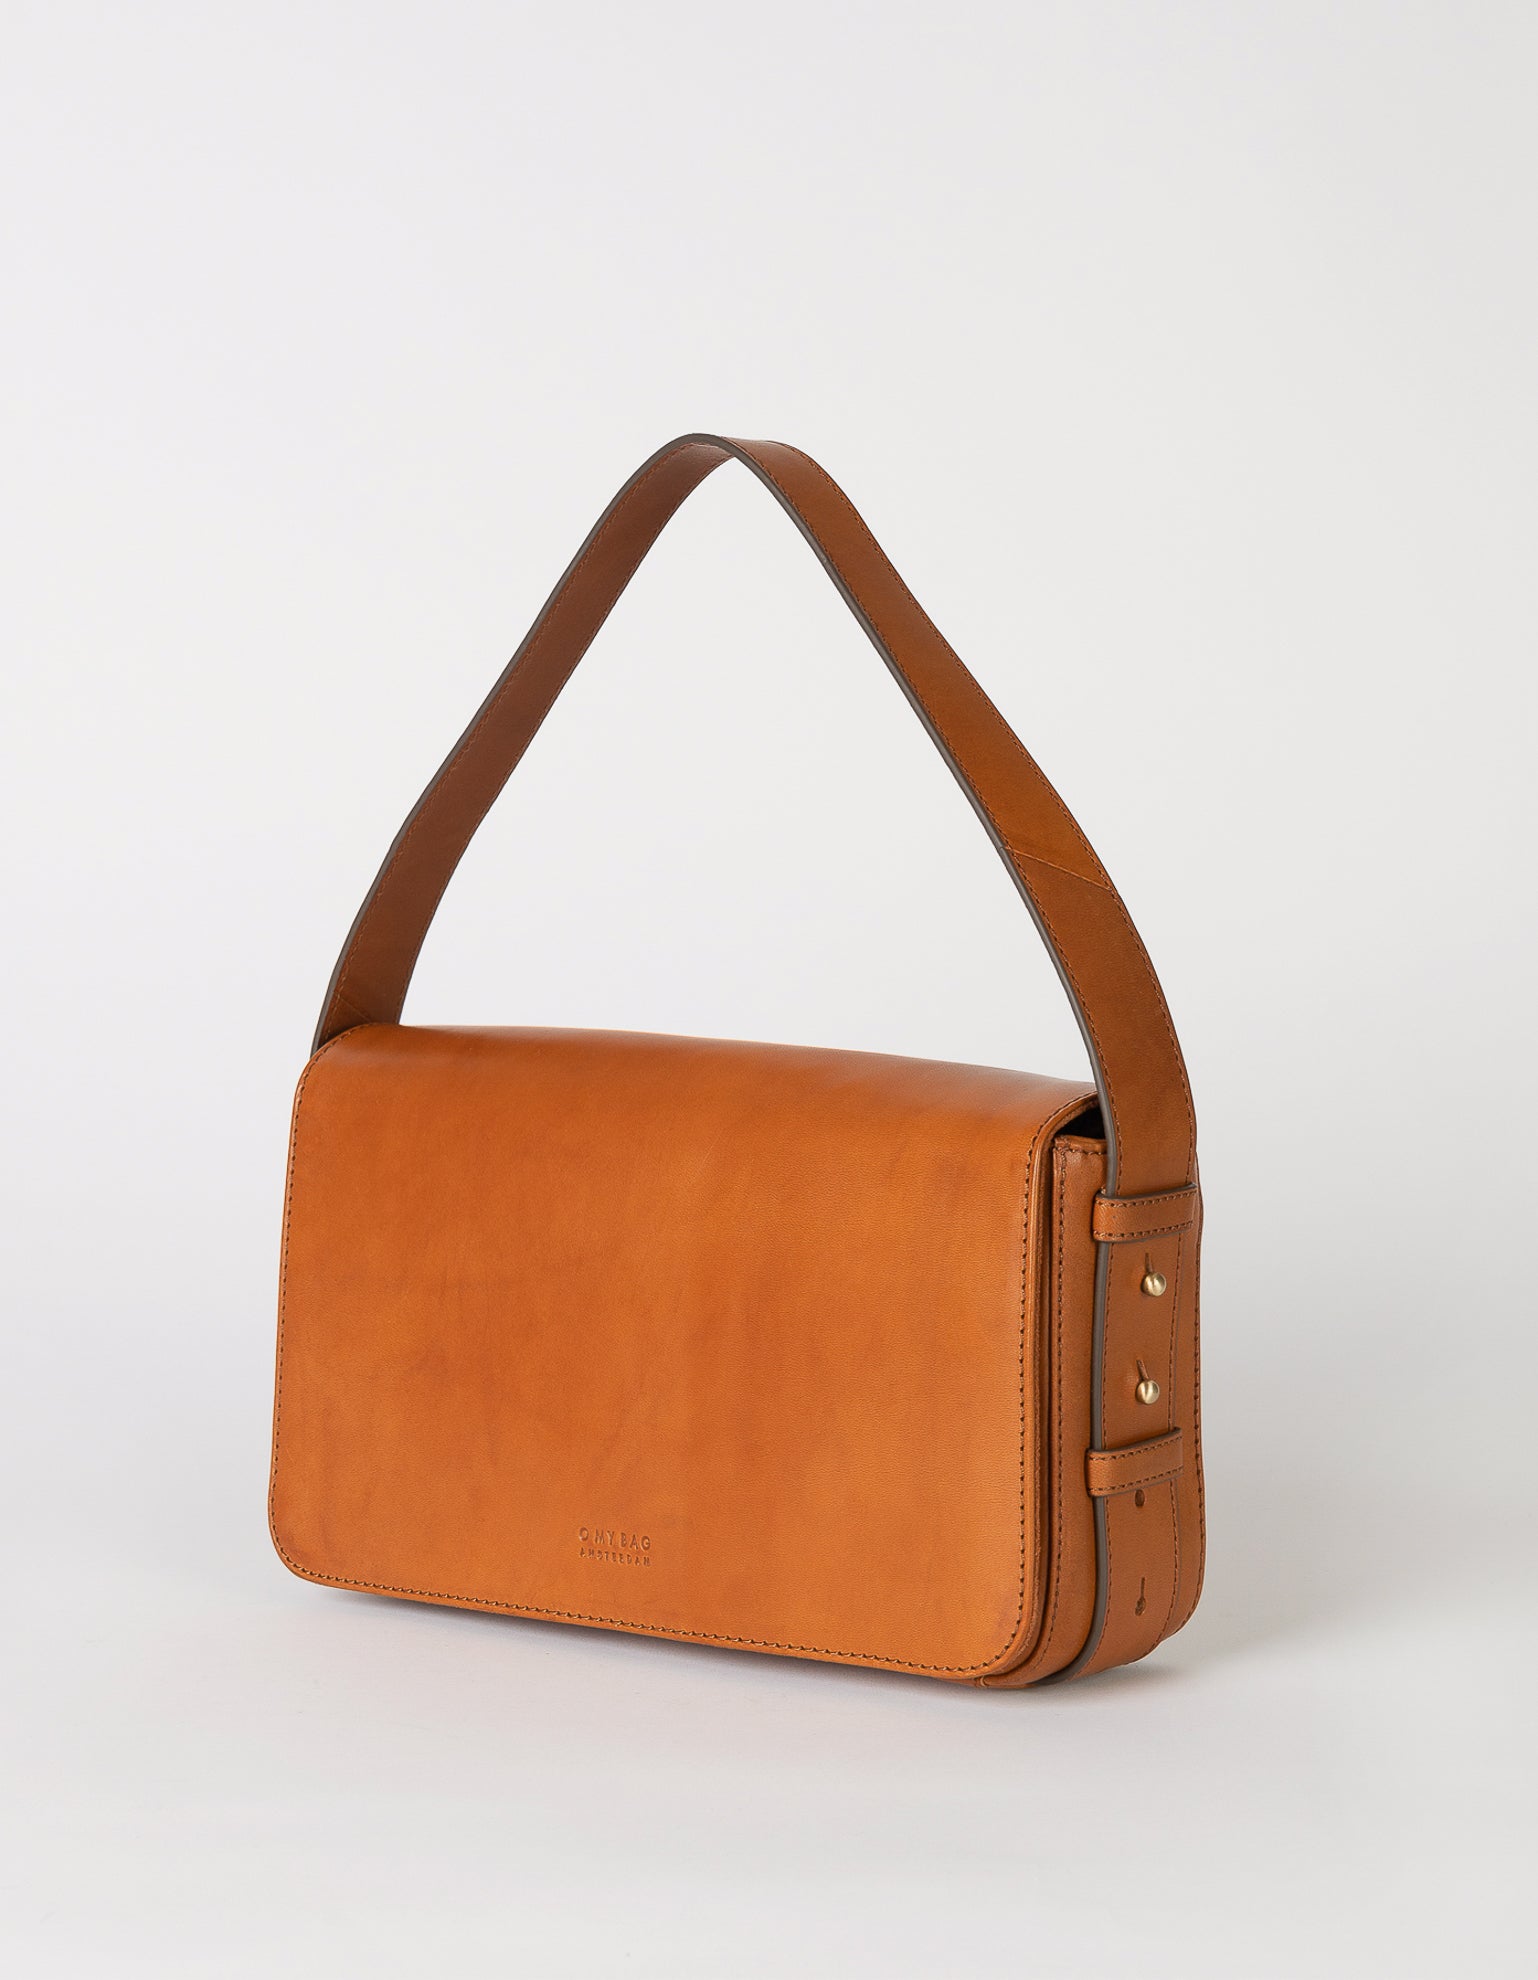 Cognac Longuette Leather womens handbag. Square shape with an adjustable strap. Side product image.